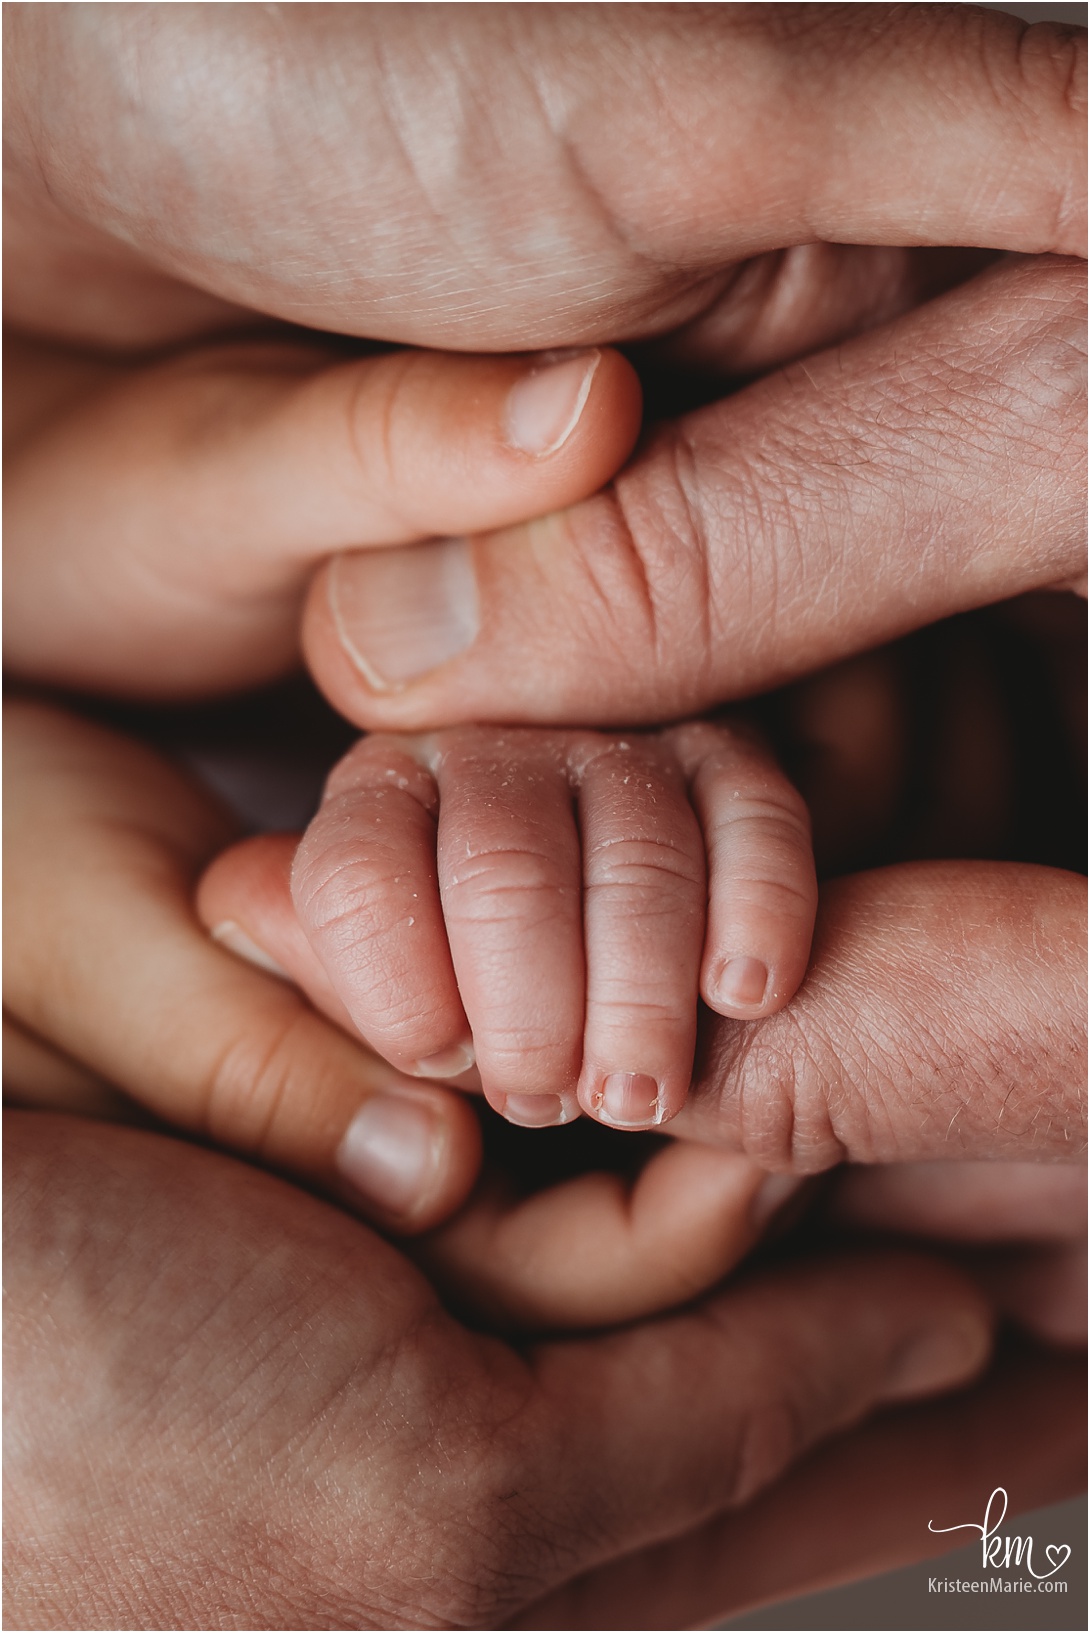 newborn baby hand surround by fingers